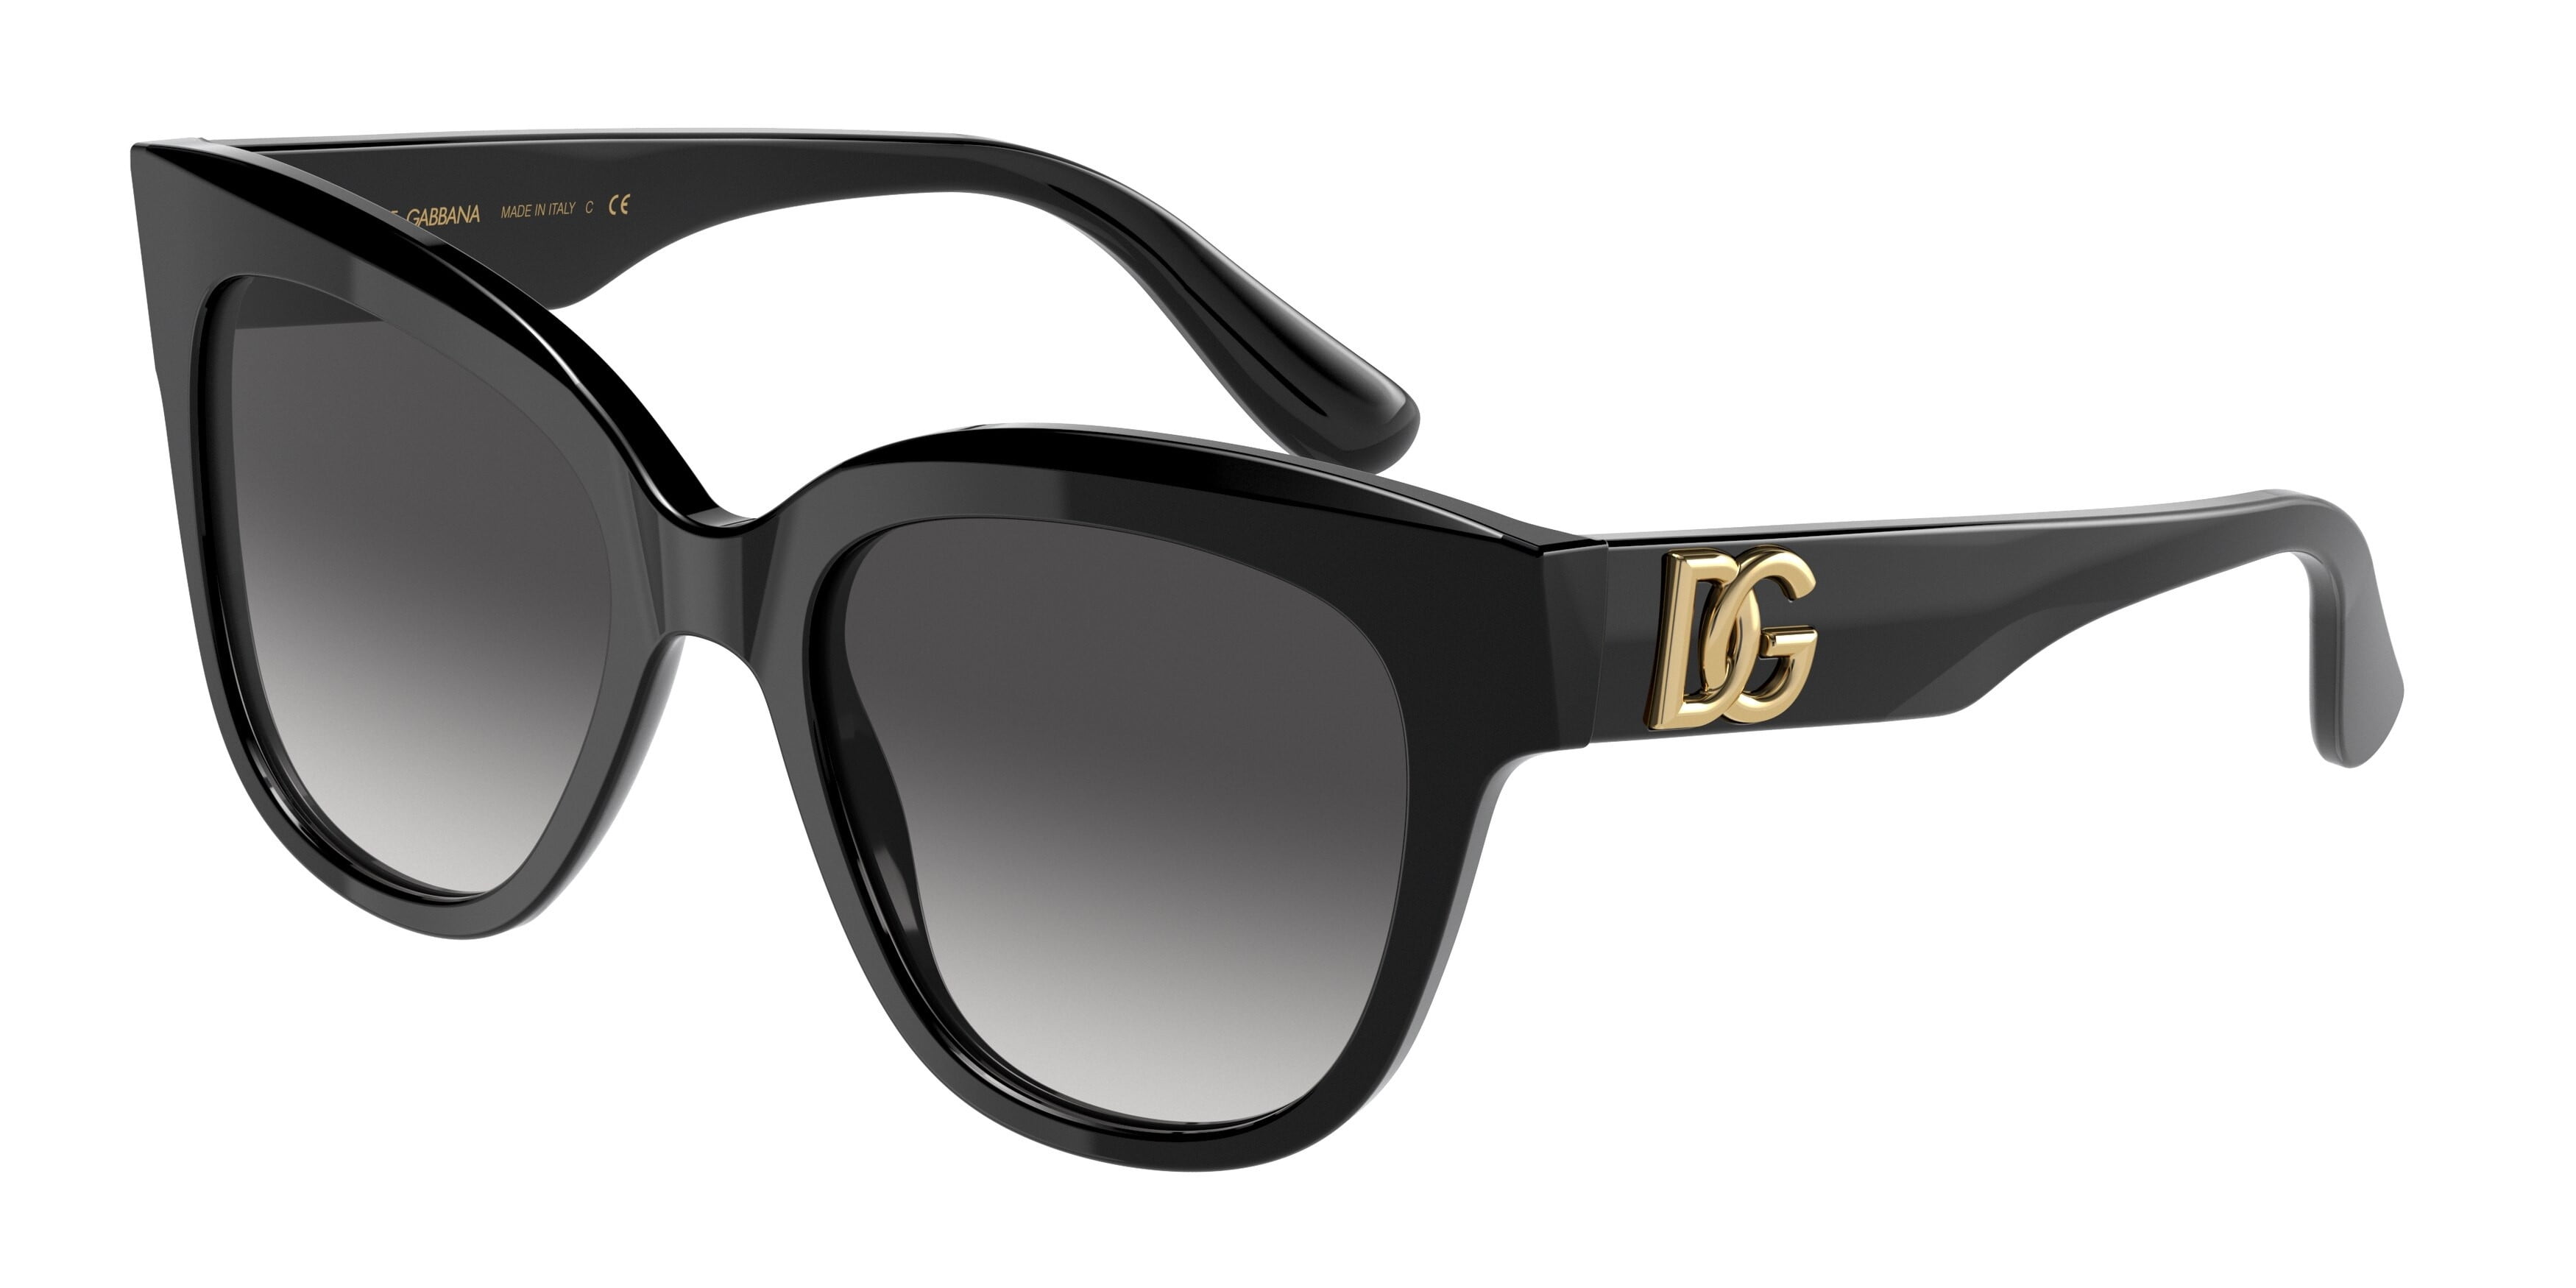 Sunglasses Dolce & Gabbana DG 4407 F 501/8G Black Grey Gradient ...